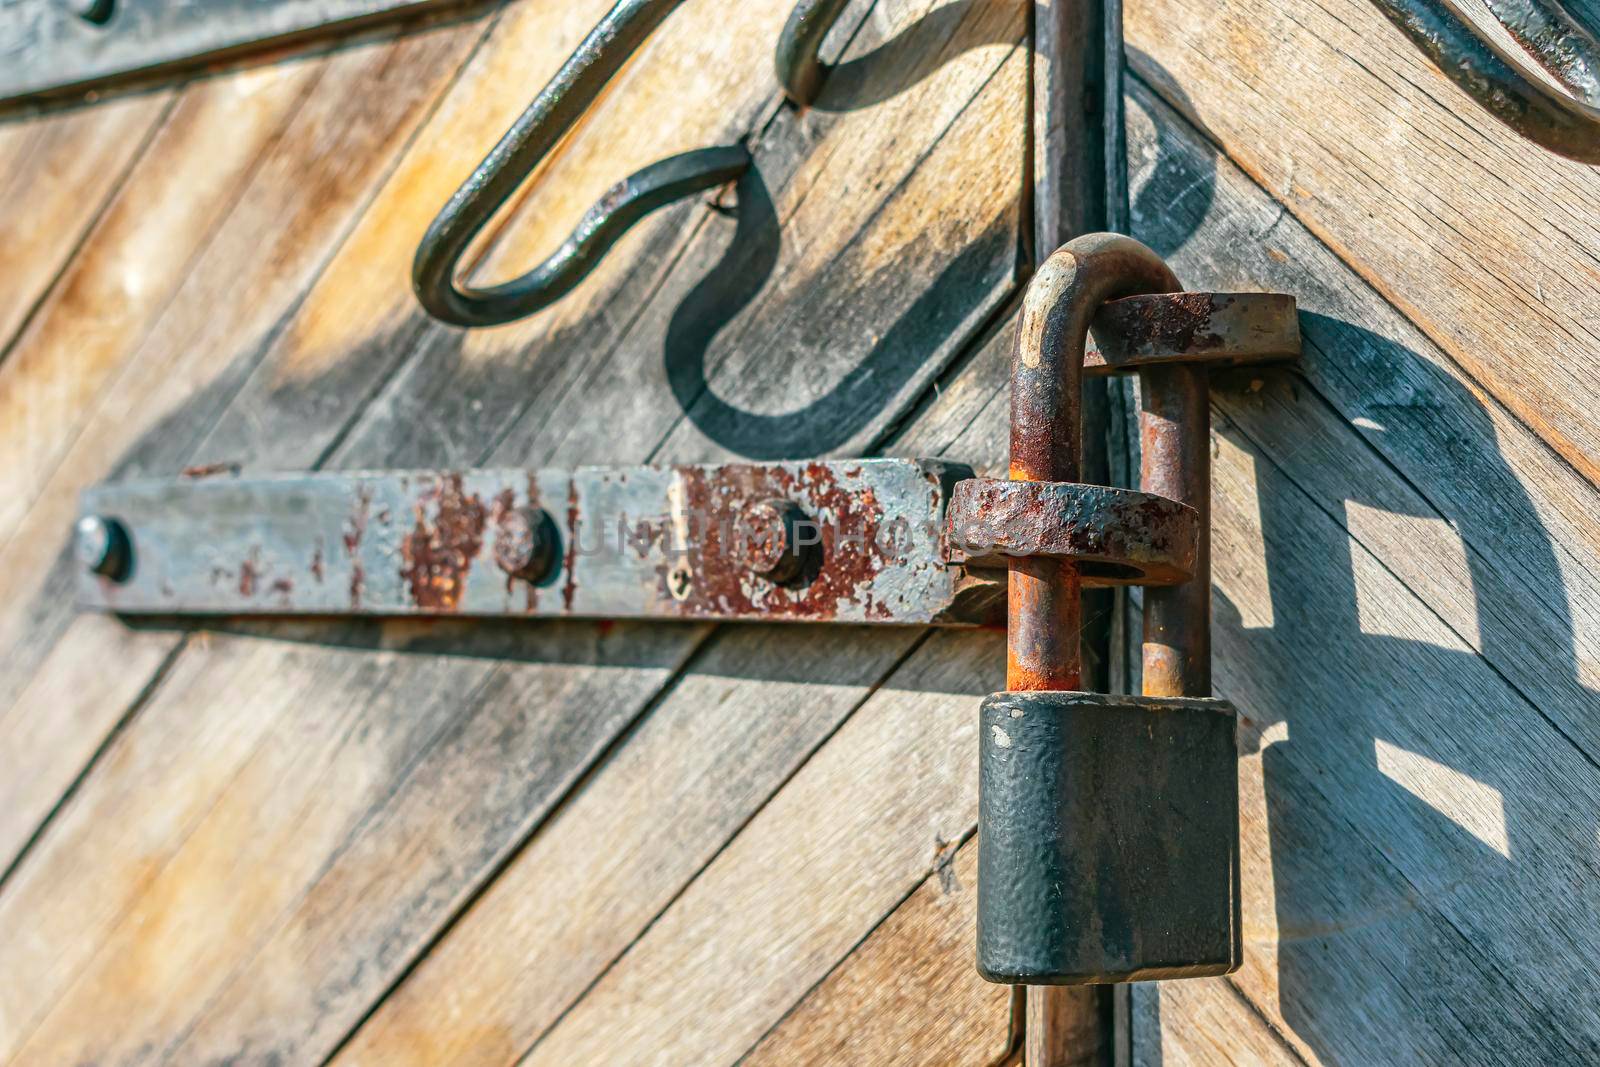 Rusty padlock locks the old wooden gates of the 18th century barracks